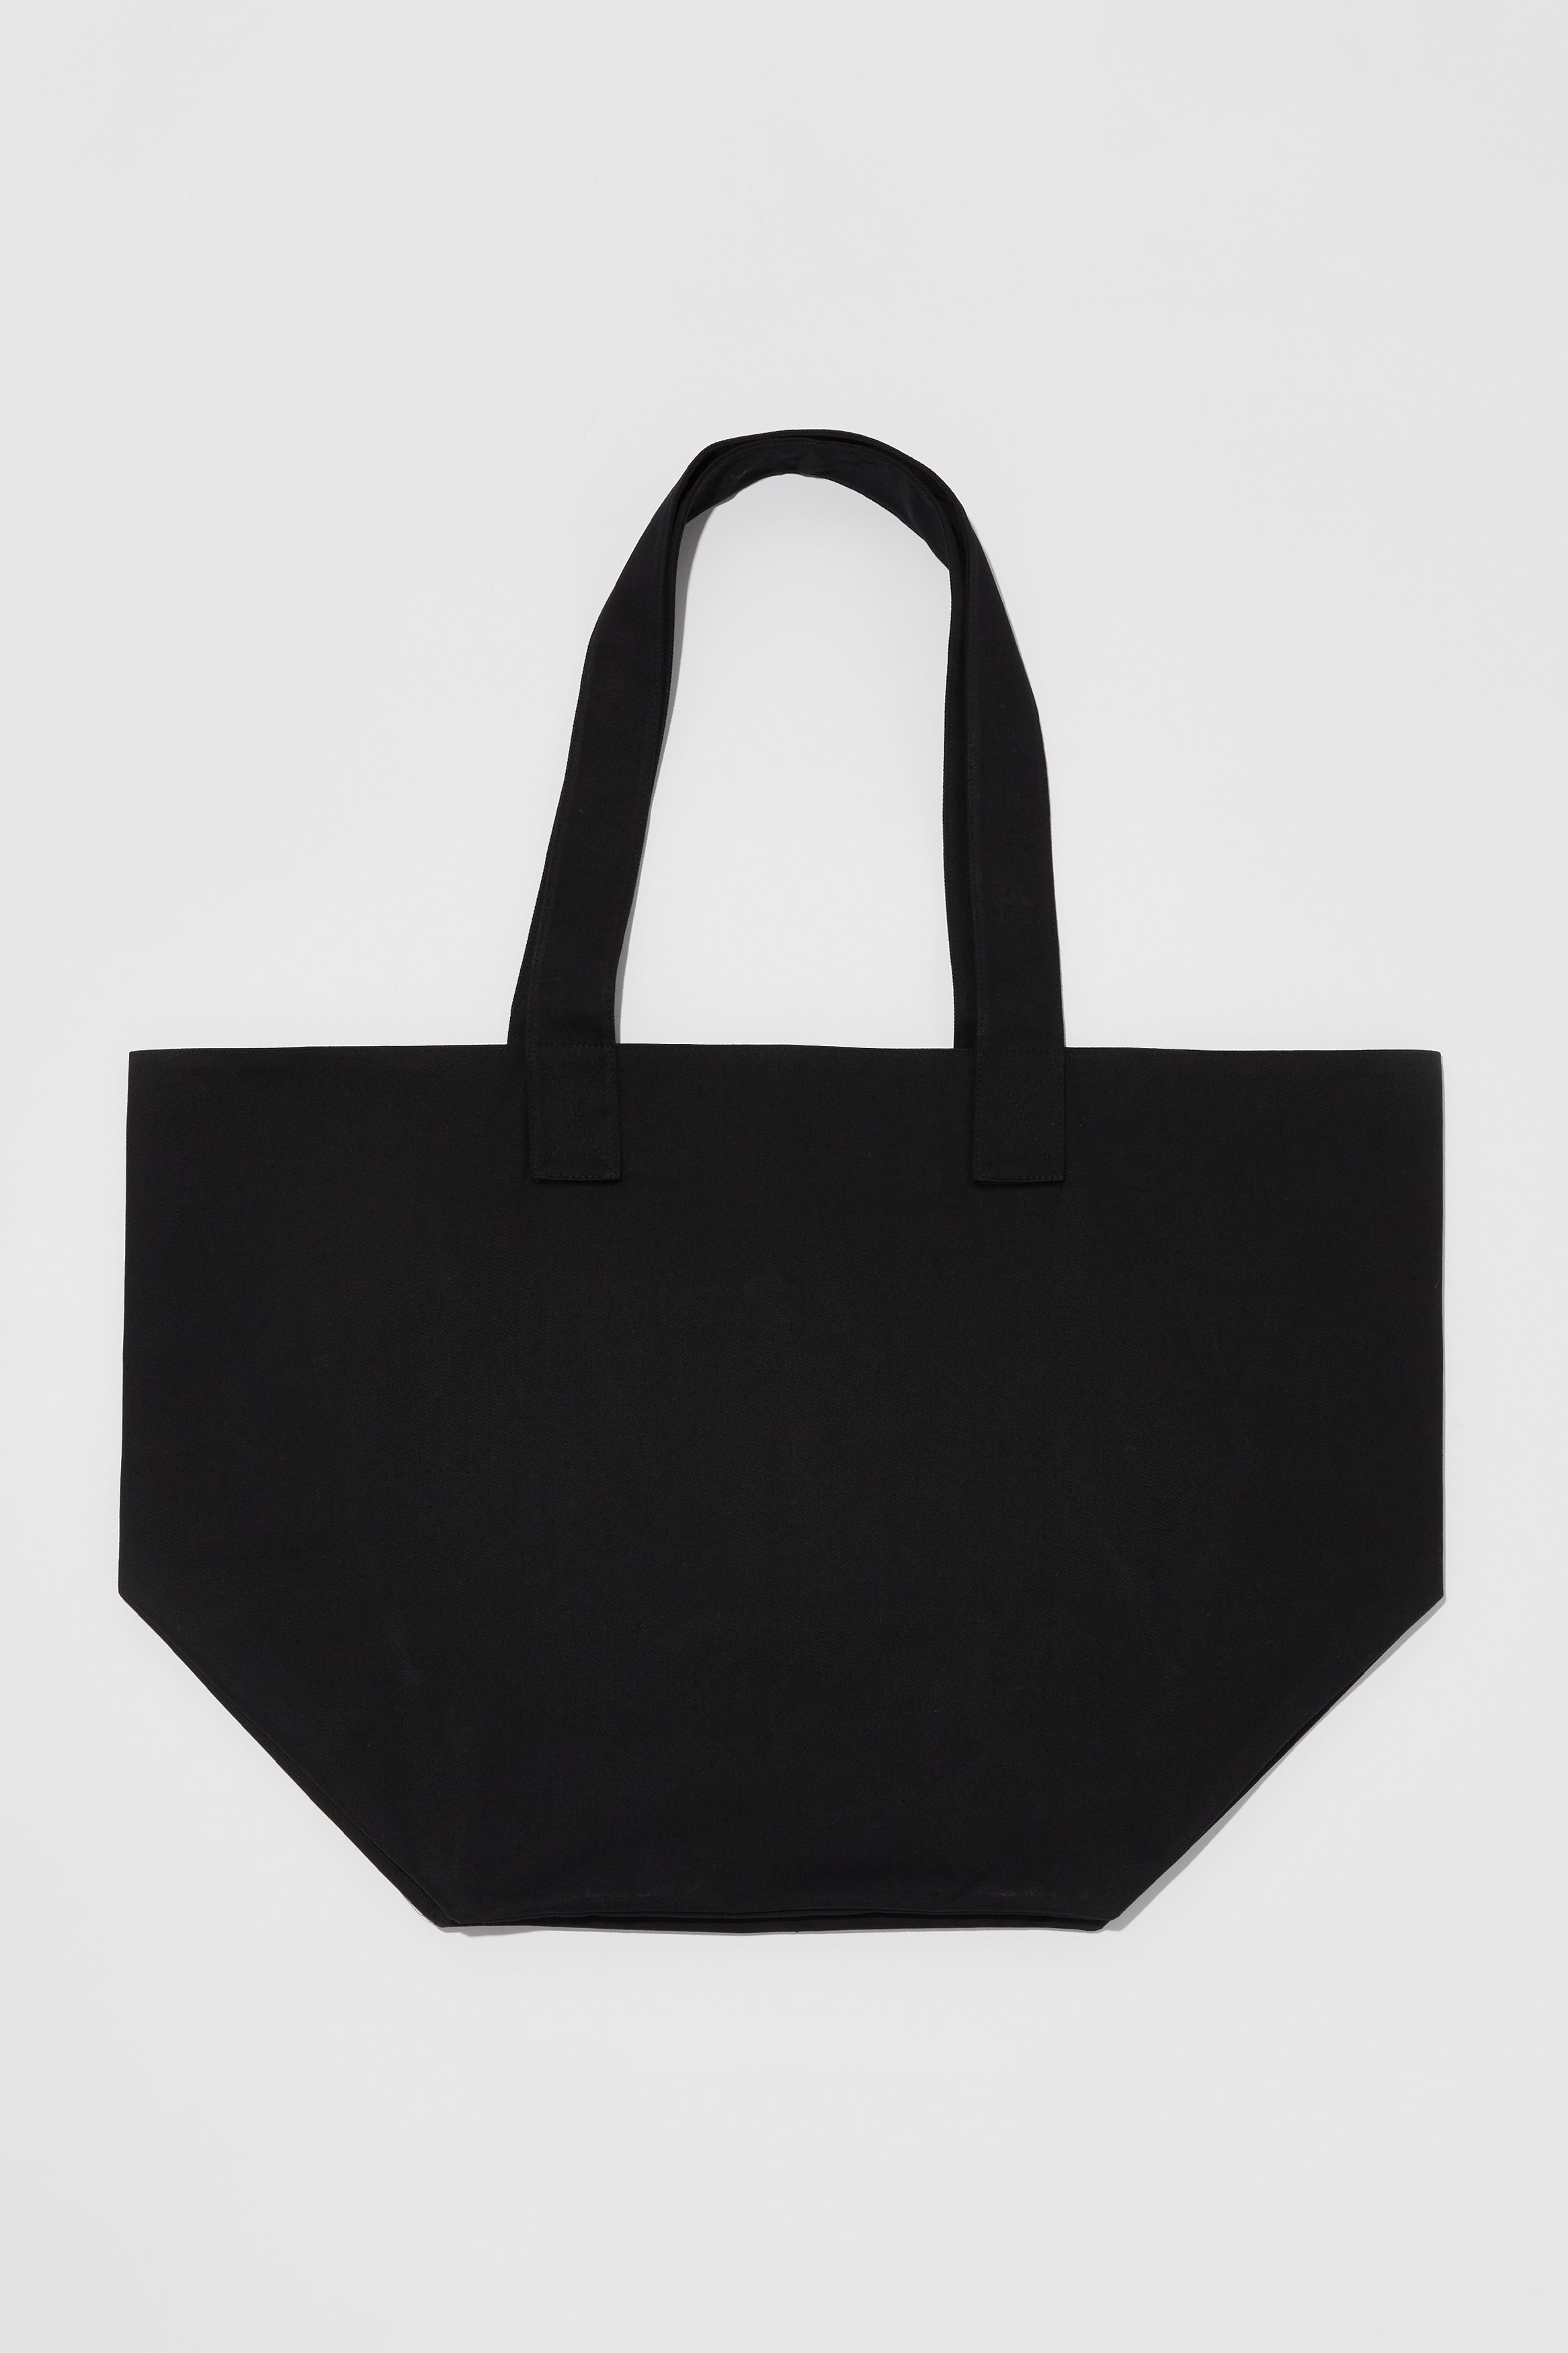 Shop the LM Workroom Tote Bag by Lee Mathews